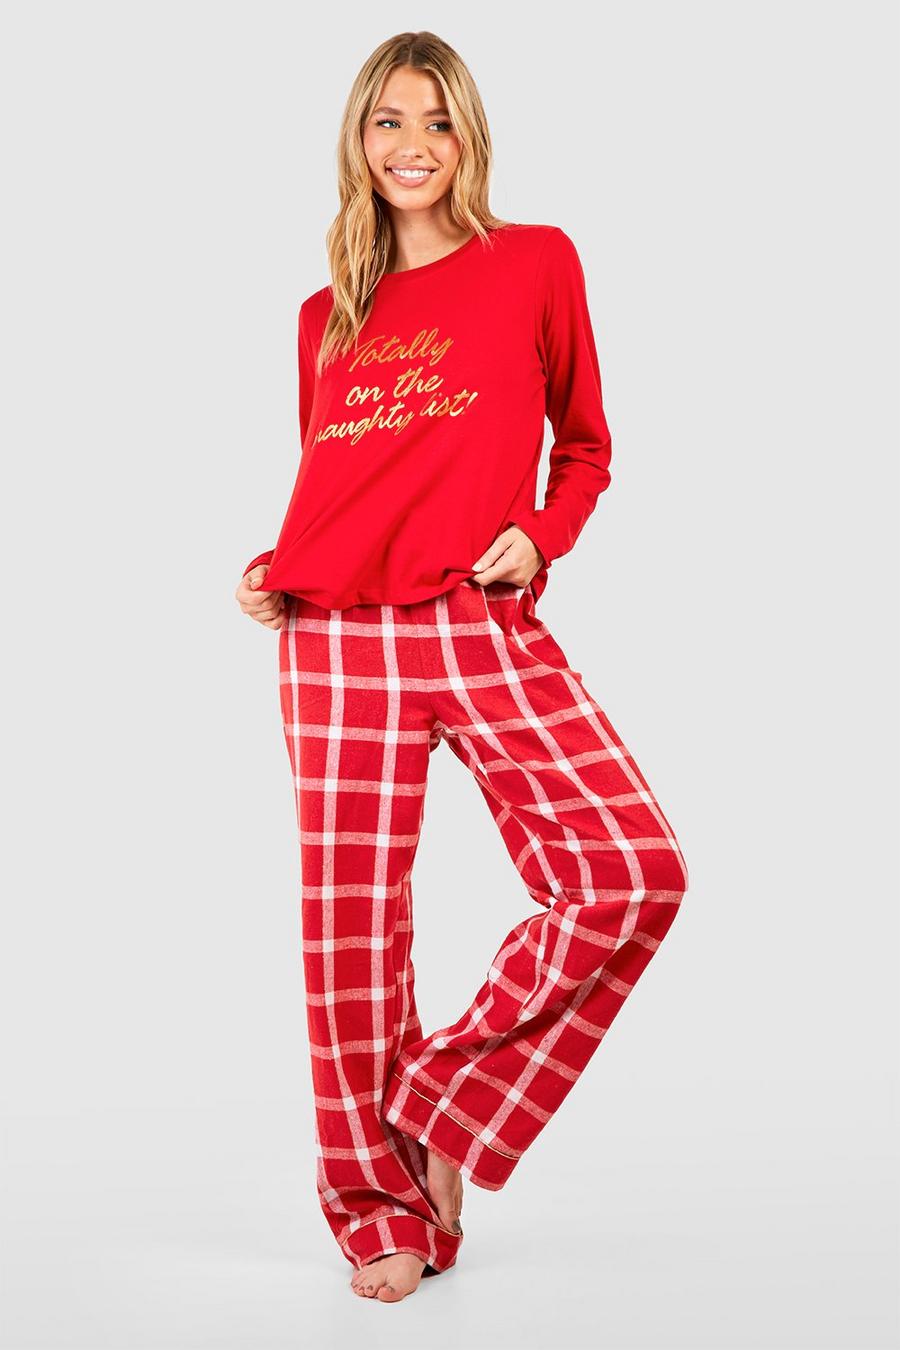 Pijama navideño de pantalón largo de cuadros y camiseta de manga larga con estampado Naughty List, Red rojo